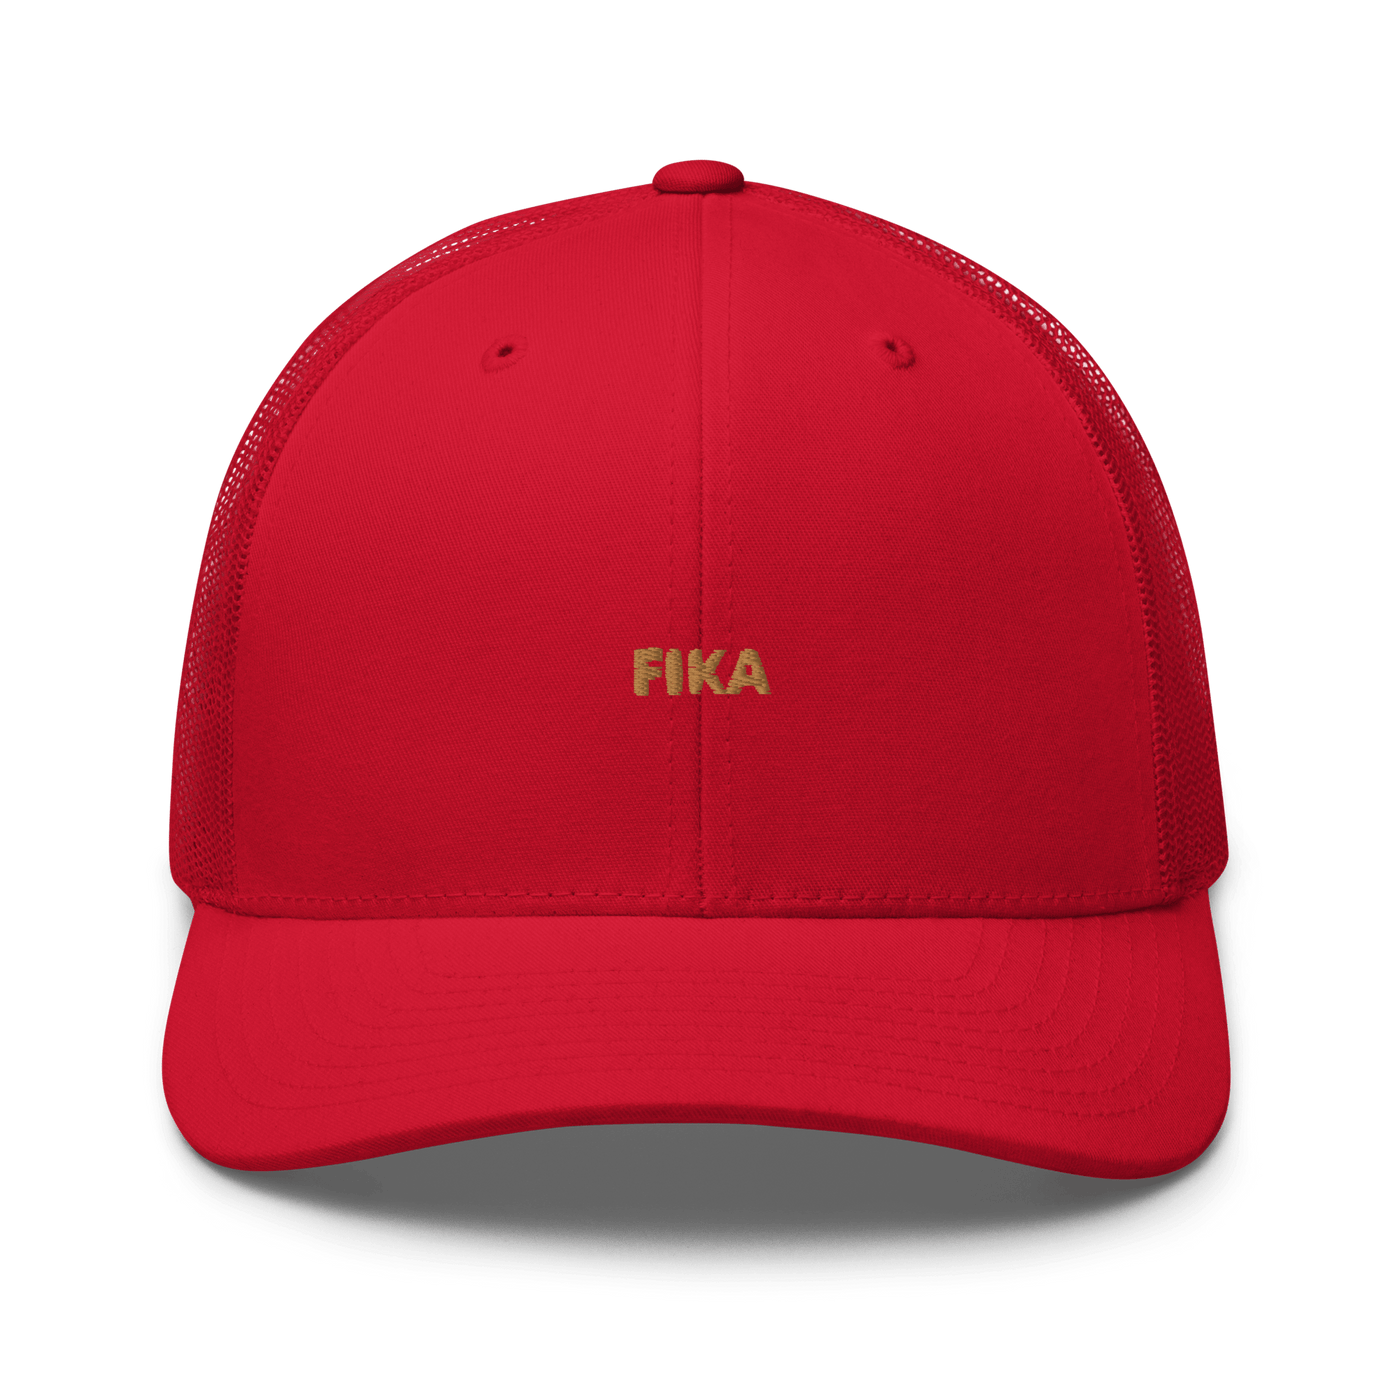 FIKA Trucker Cap - Navy - - Just Another Cap Store